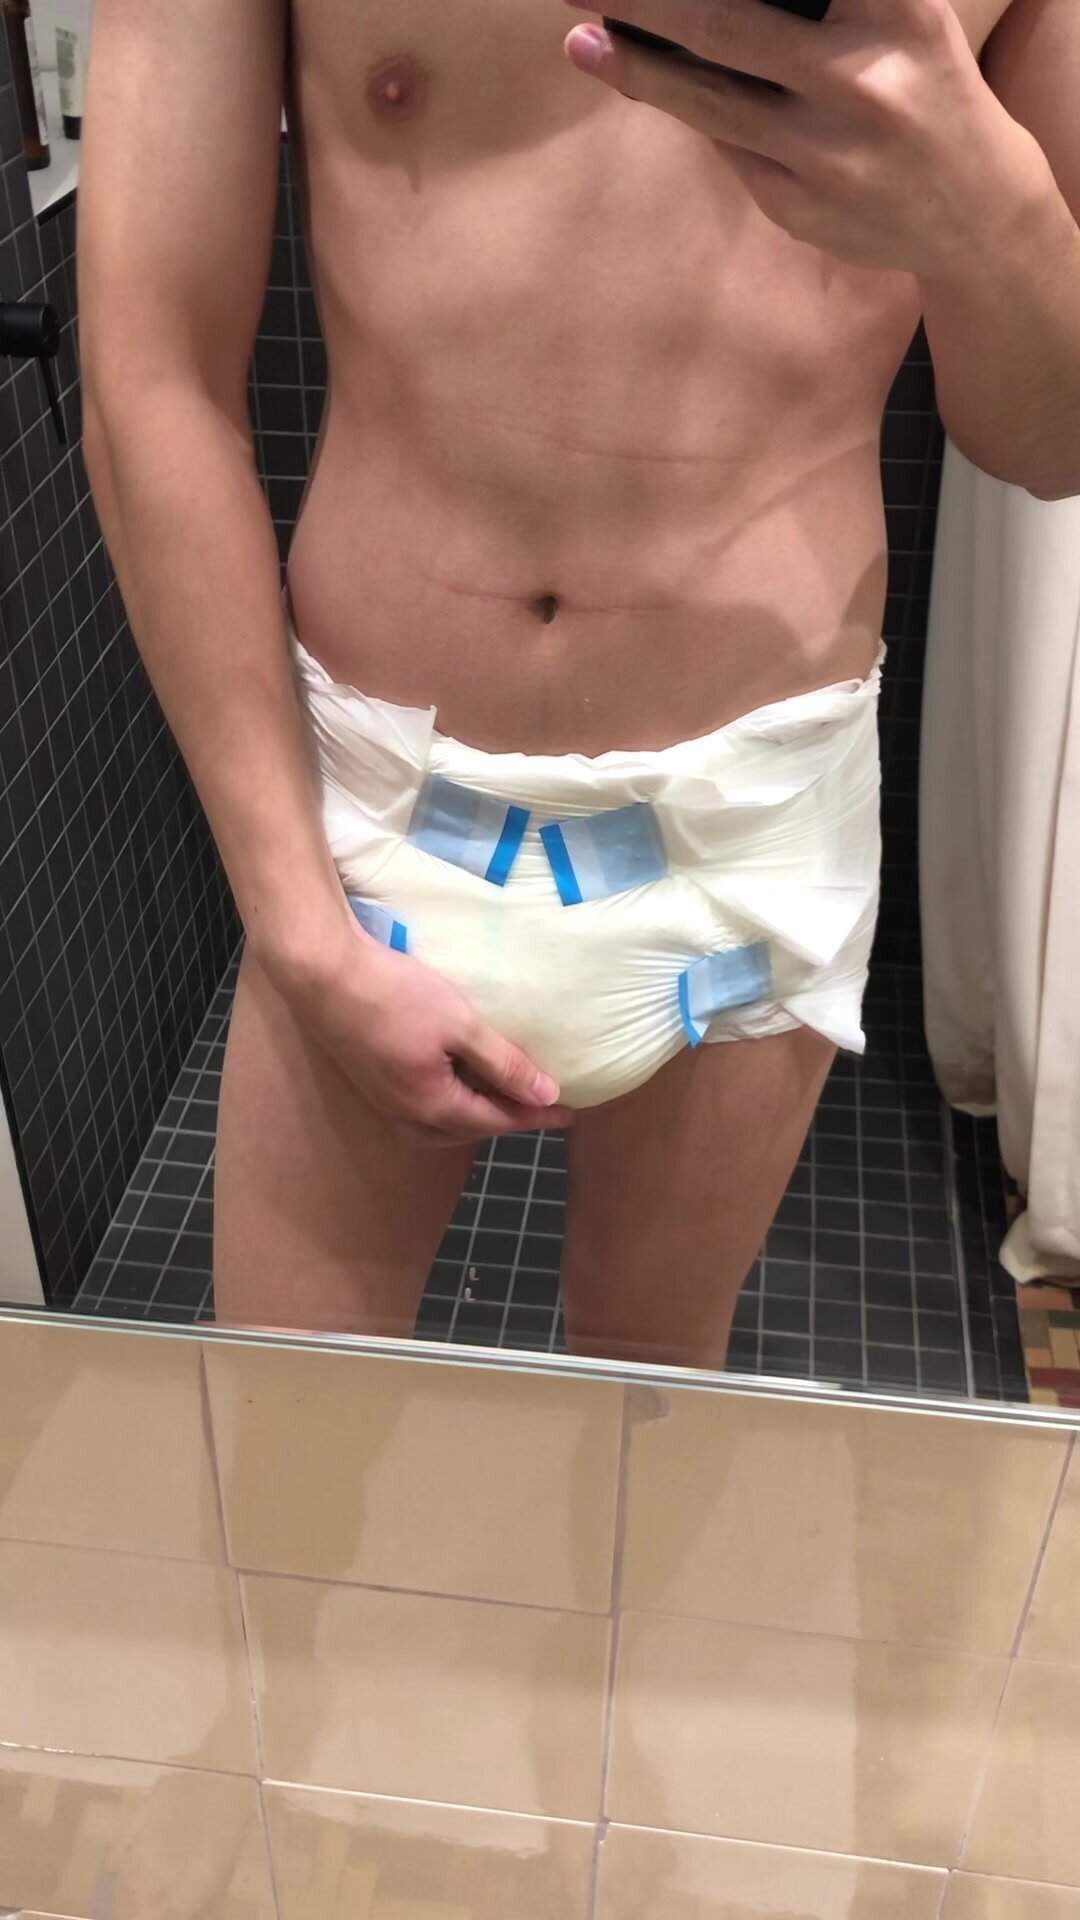 Cute boy shows off wet diaper